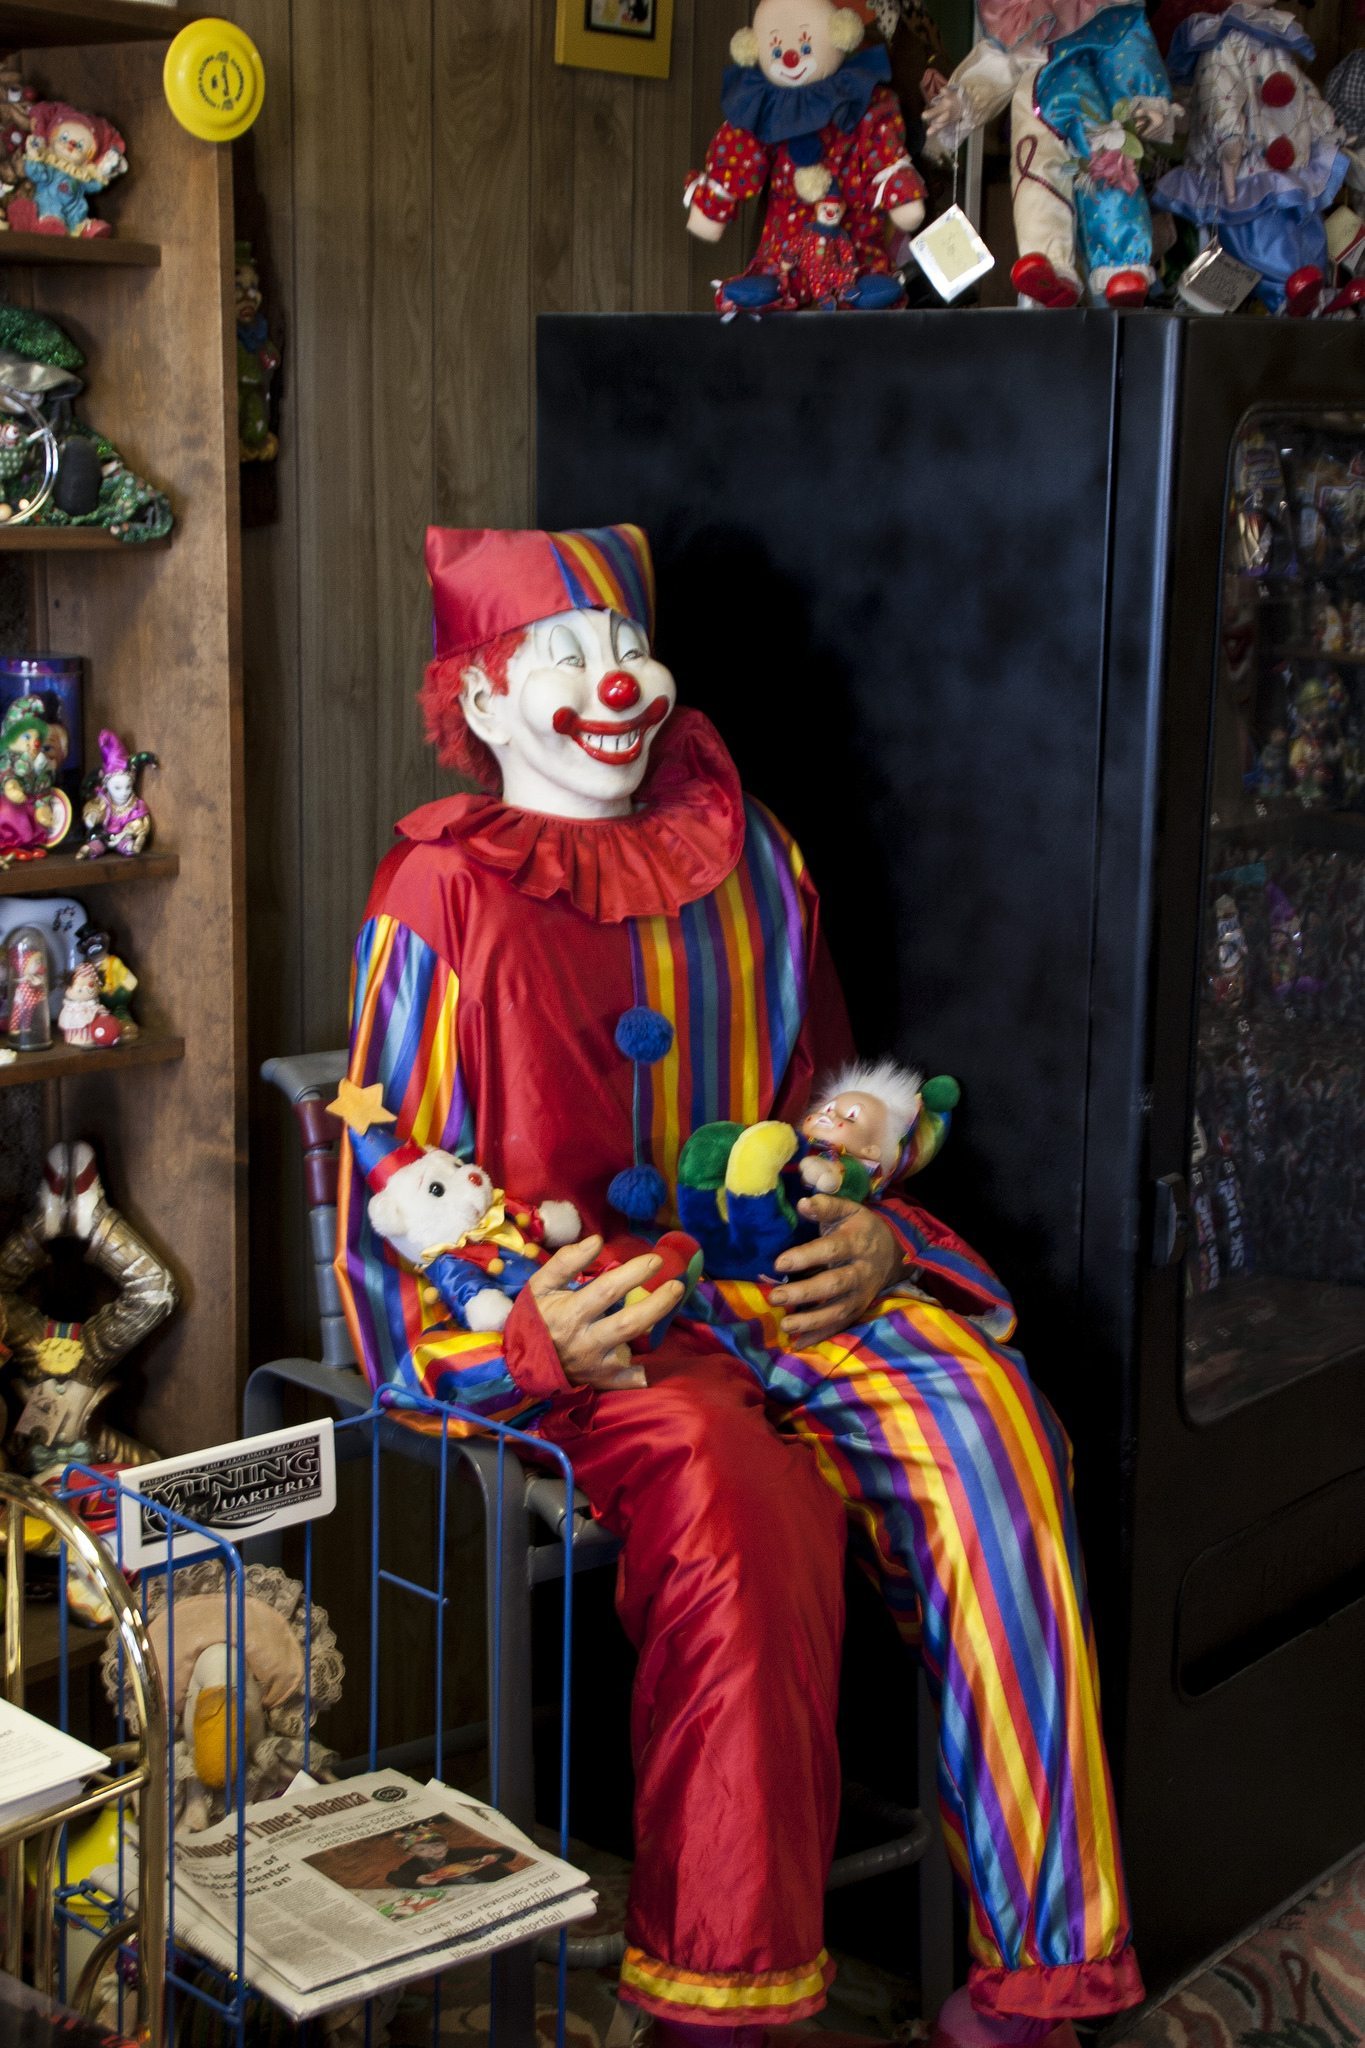 The lobby of the Clown Motel